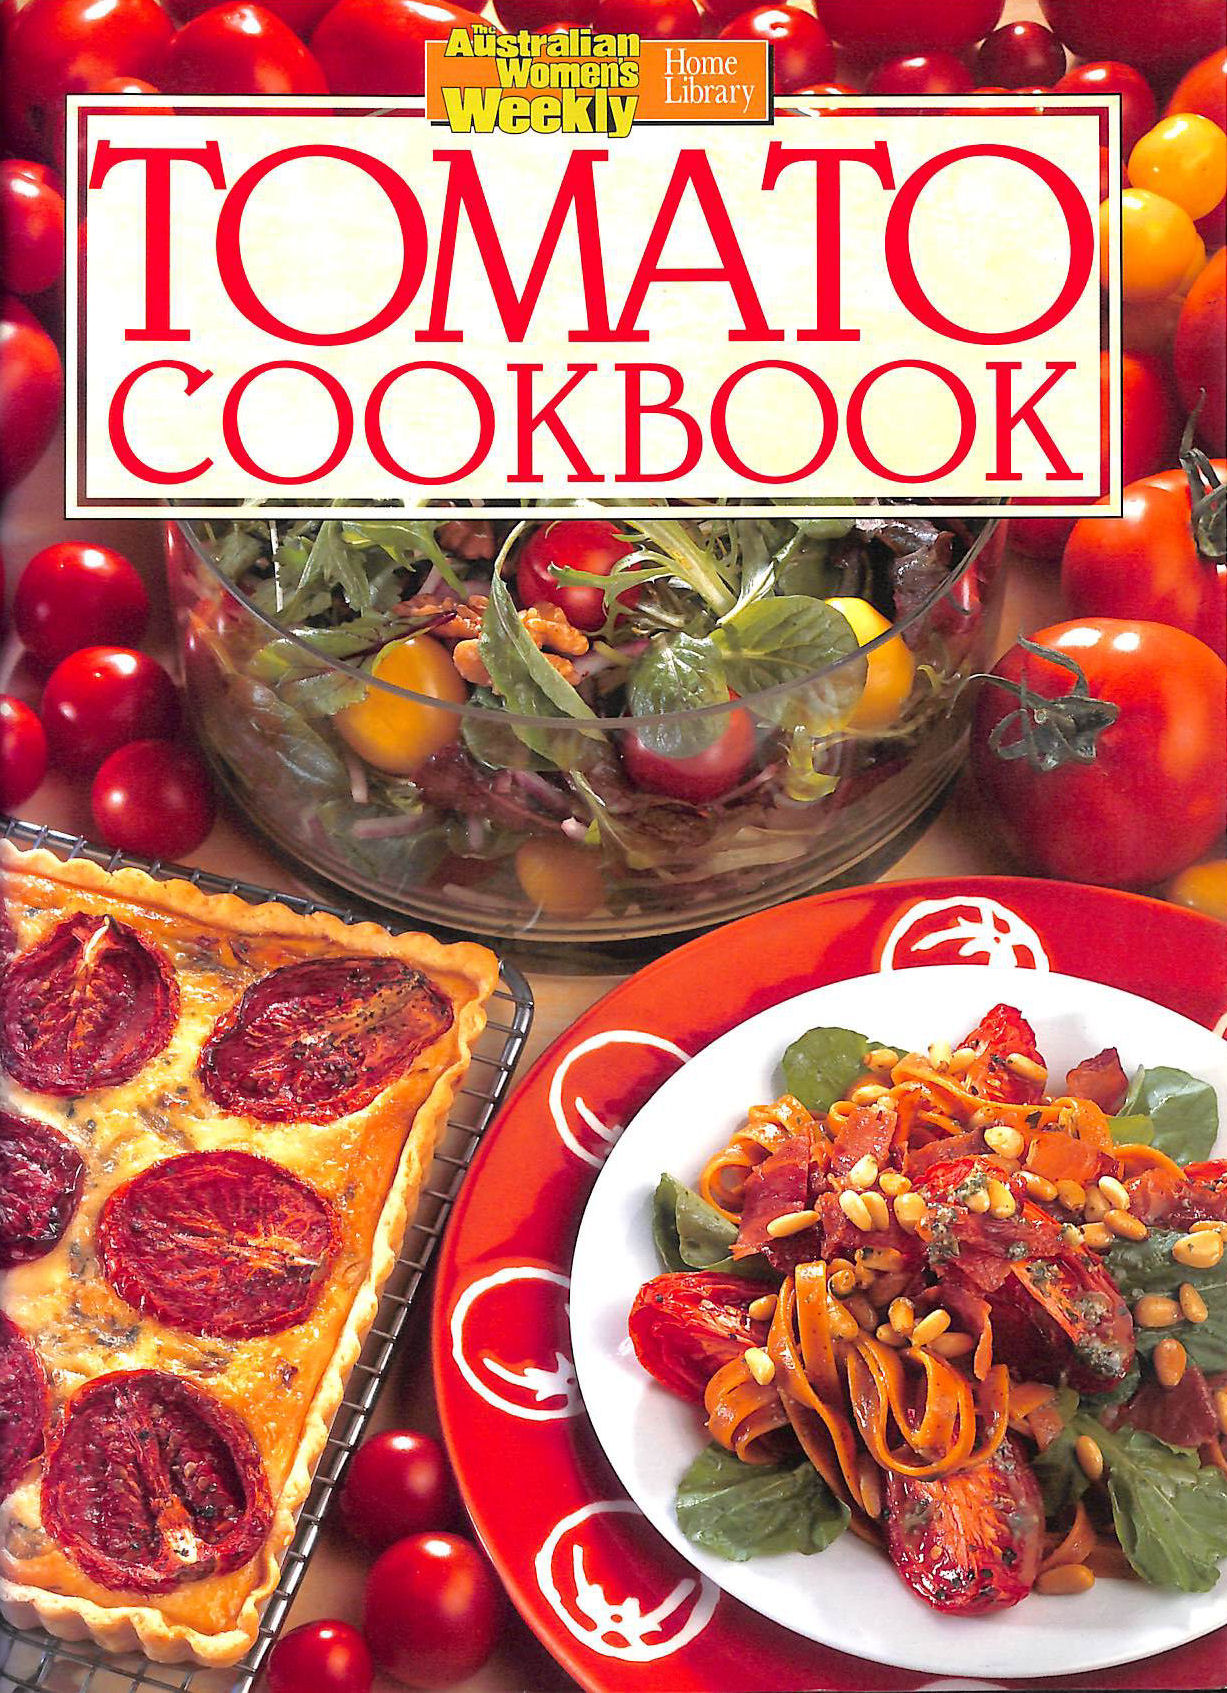 BLACKER, MARYANNE [EDITOR] - Tomato Cookbook. Australian Women's Weekly Home Library